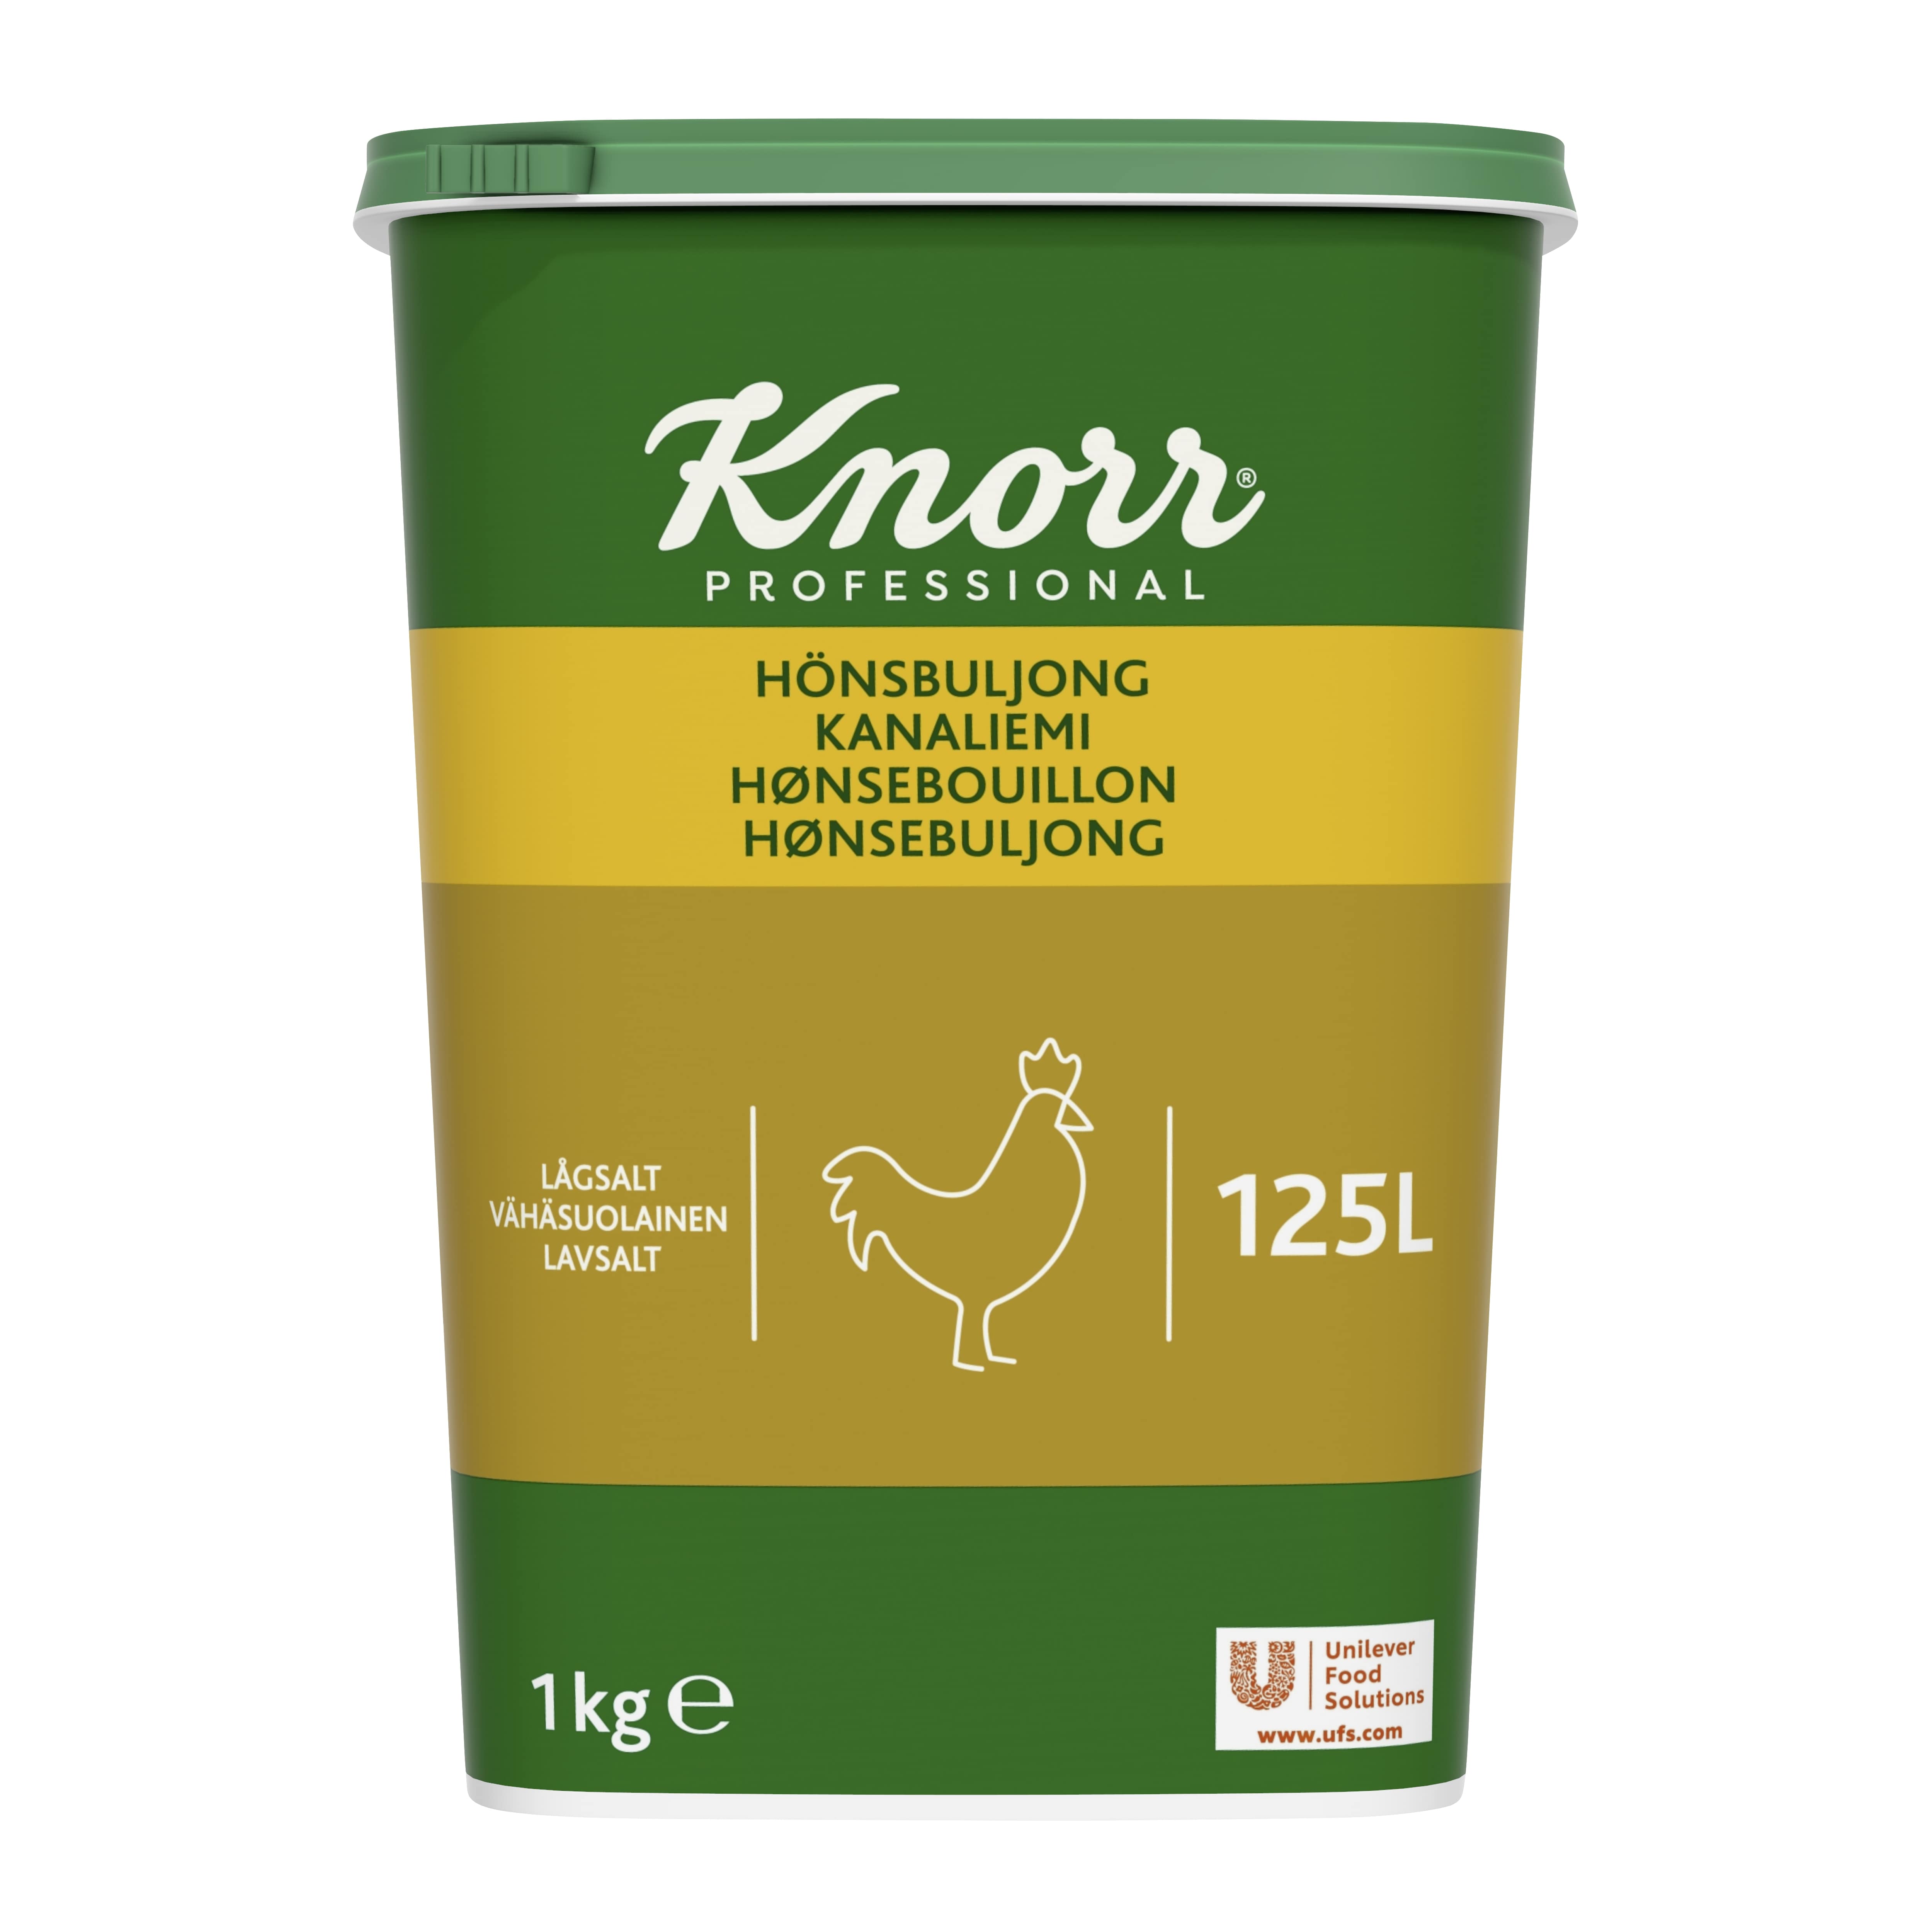 Knorr Kanaliemi vähäsuolainen 1 kg/ 125 L - 